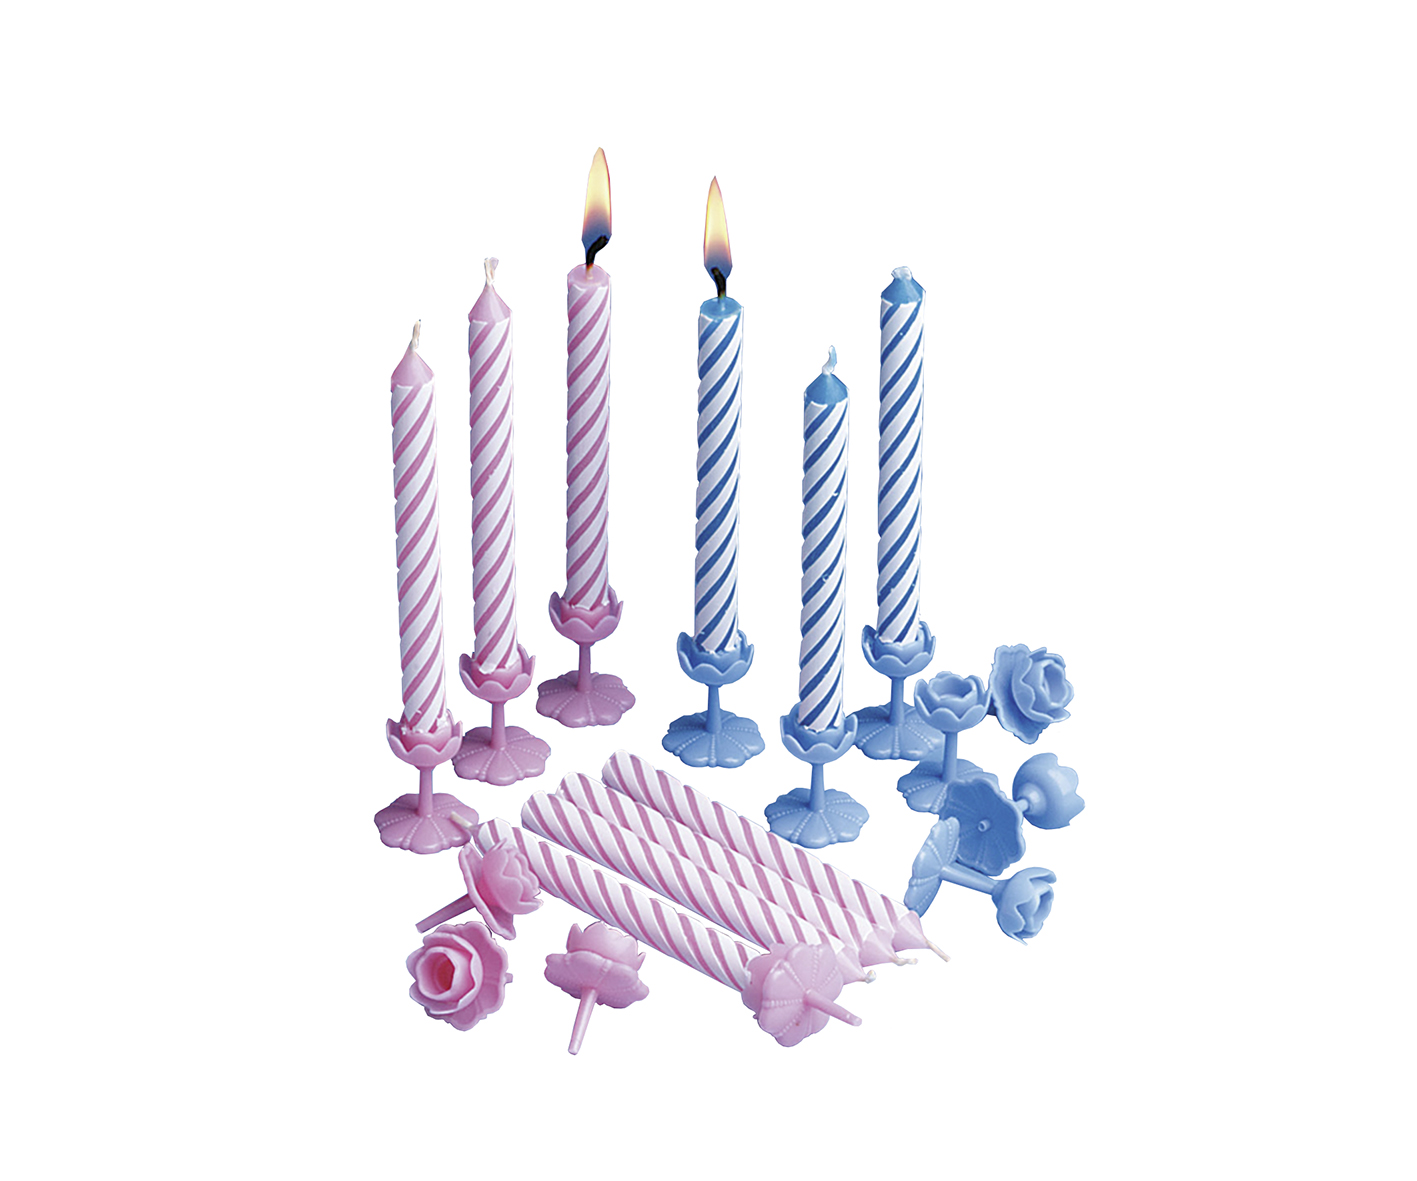 Tortendeko 1 Geburtstag Elegant 12 Blue Birthday Cake Candles Includes Holders 7 5cm